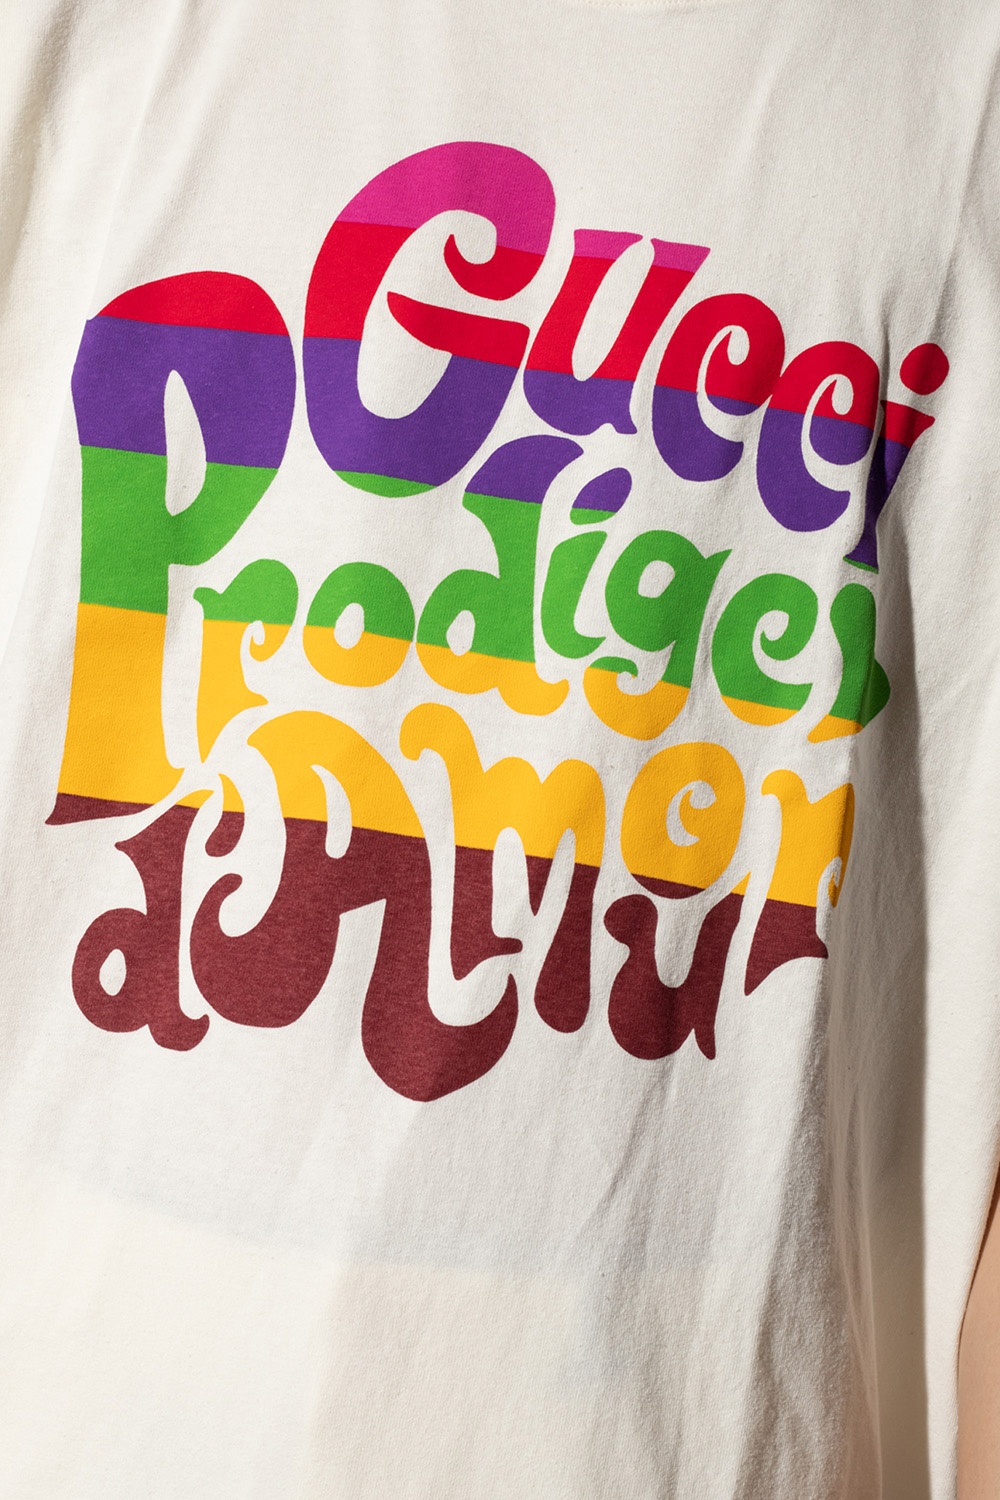 Gucci's Logo T-Shirt Gets a Rainbow Update